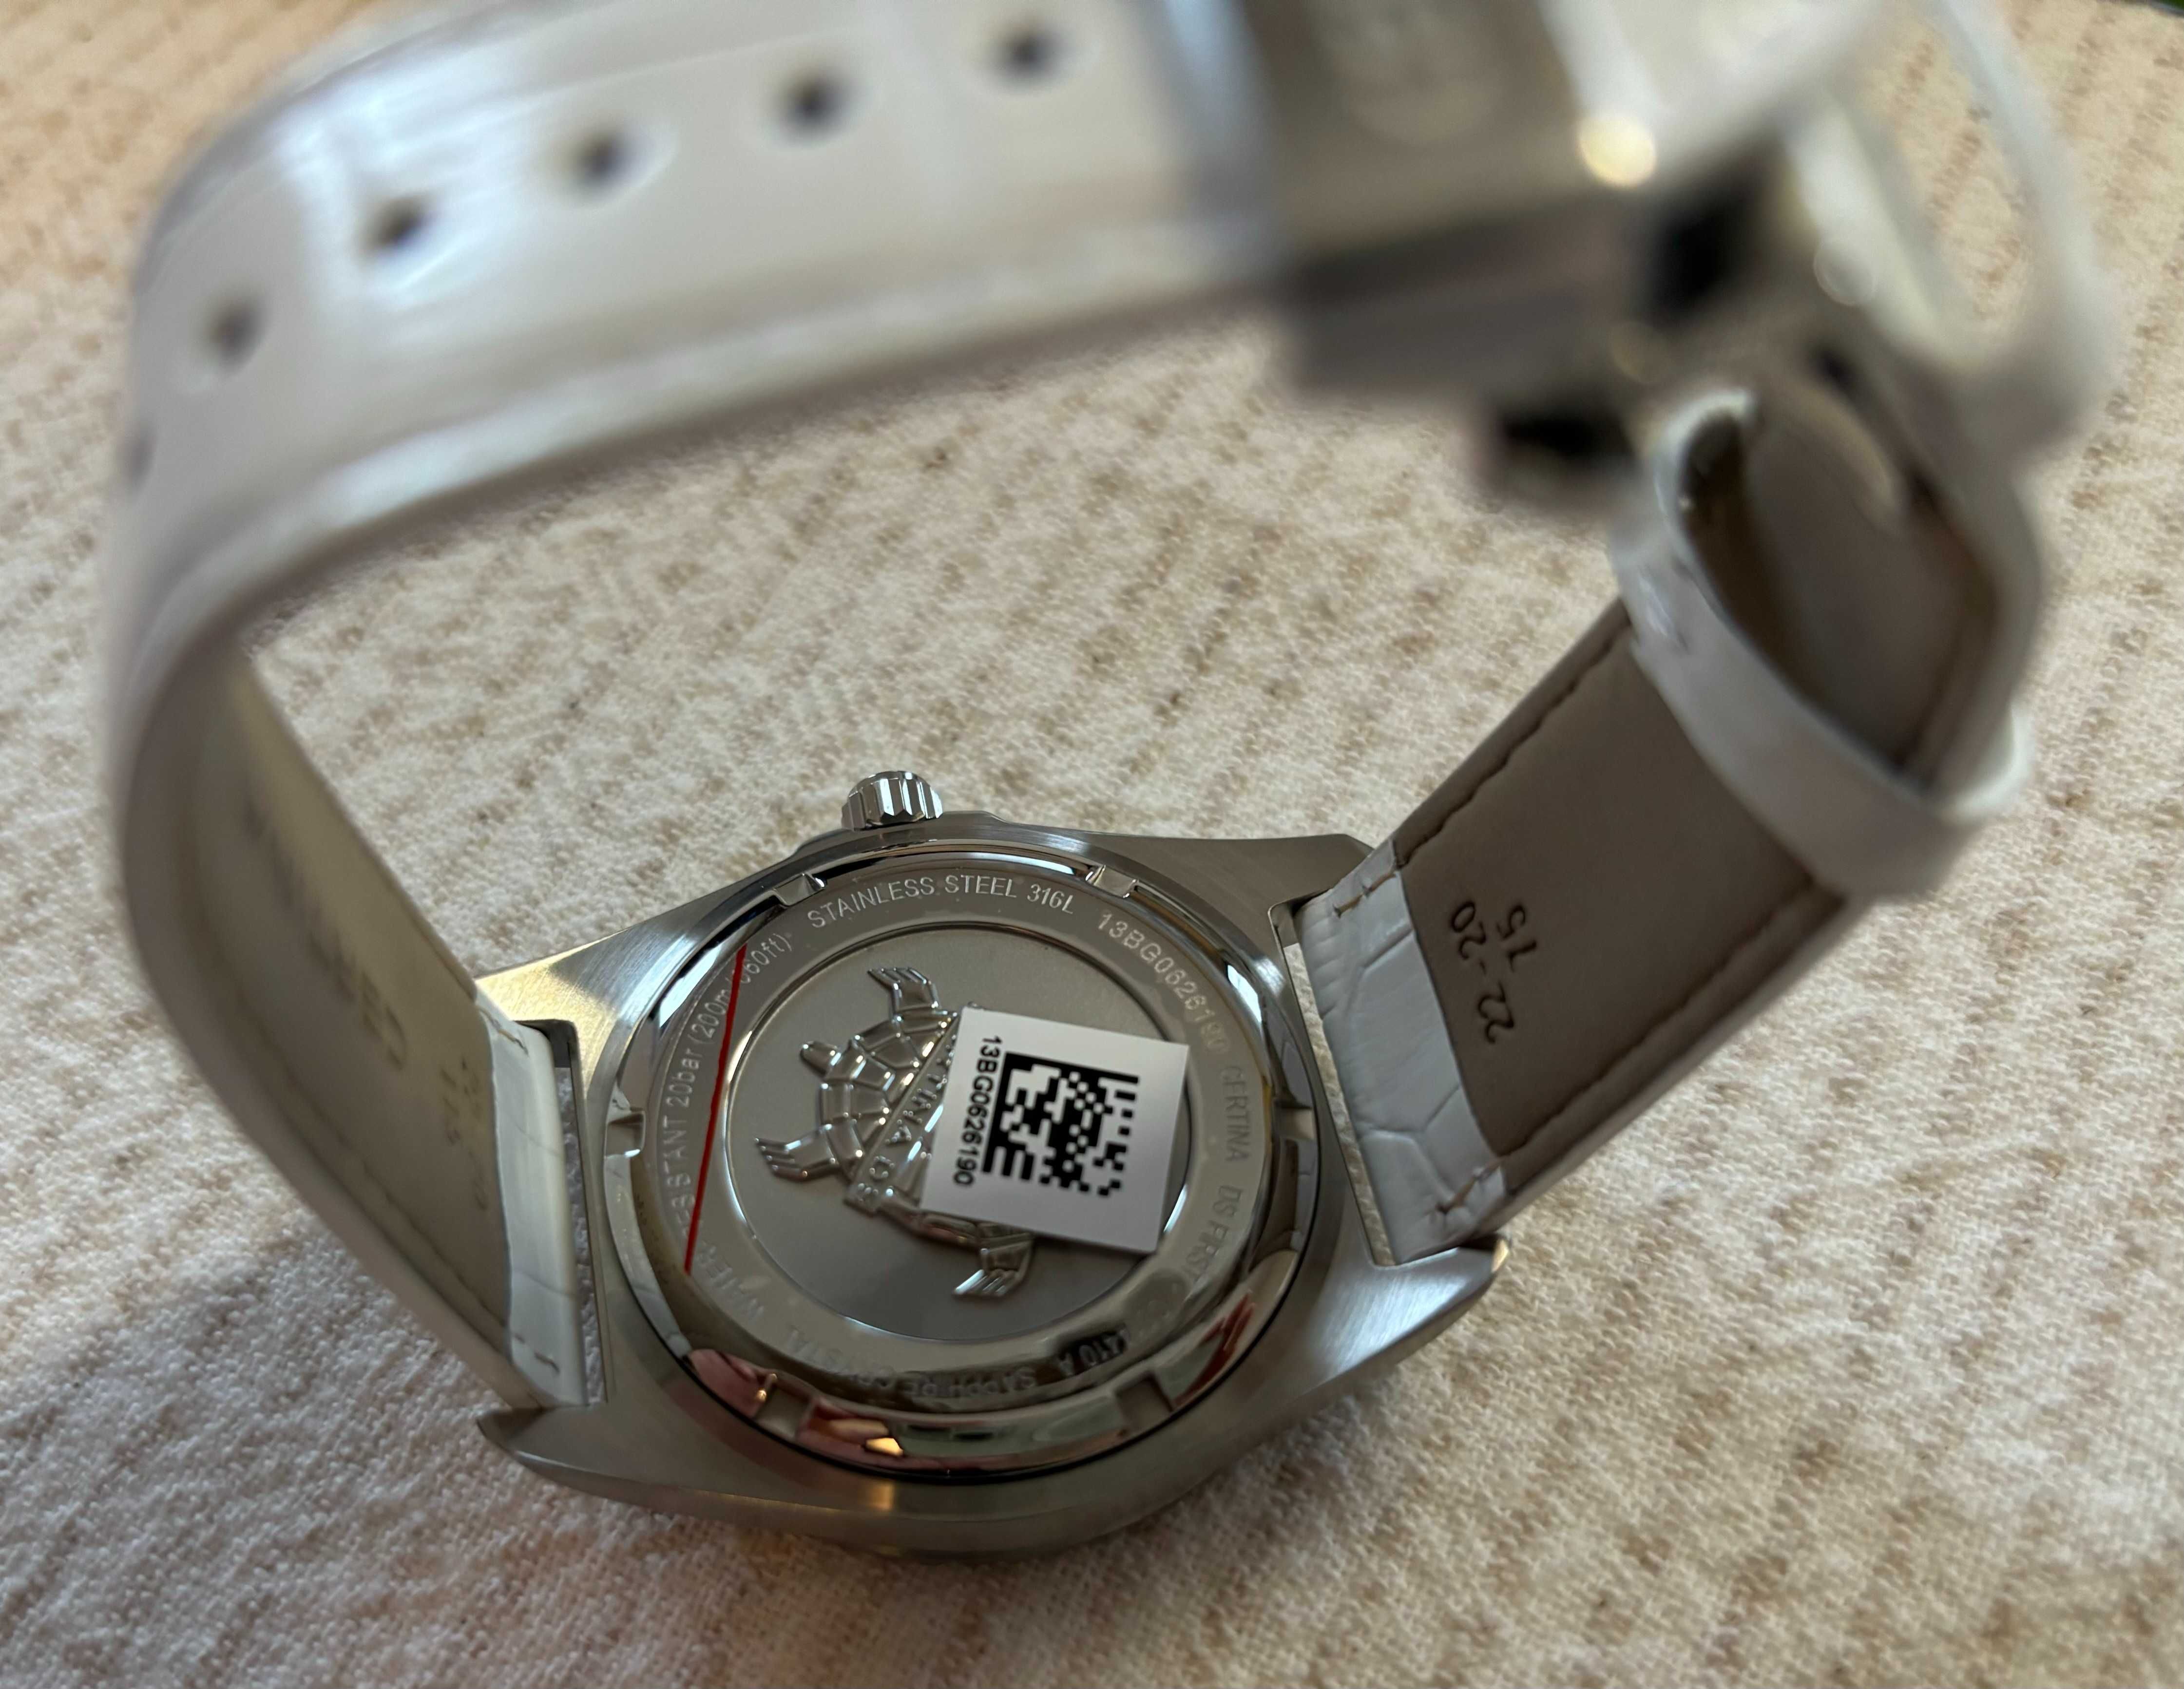 nowa CERTINA biały zegarek męski damski unisex 41mm szafir i ceramika